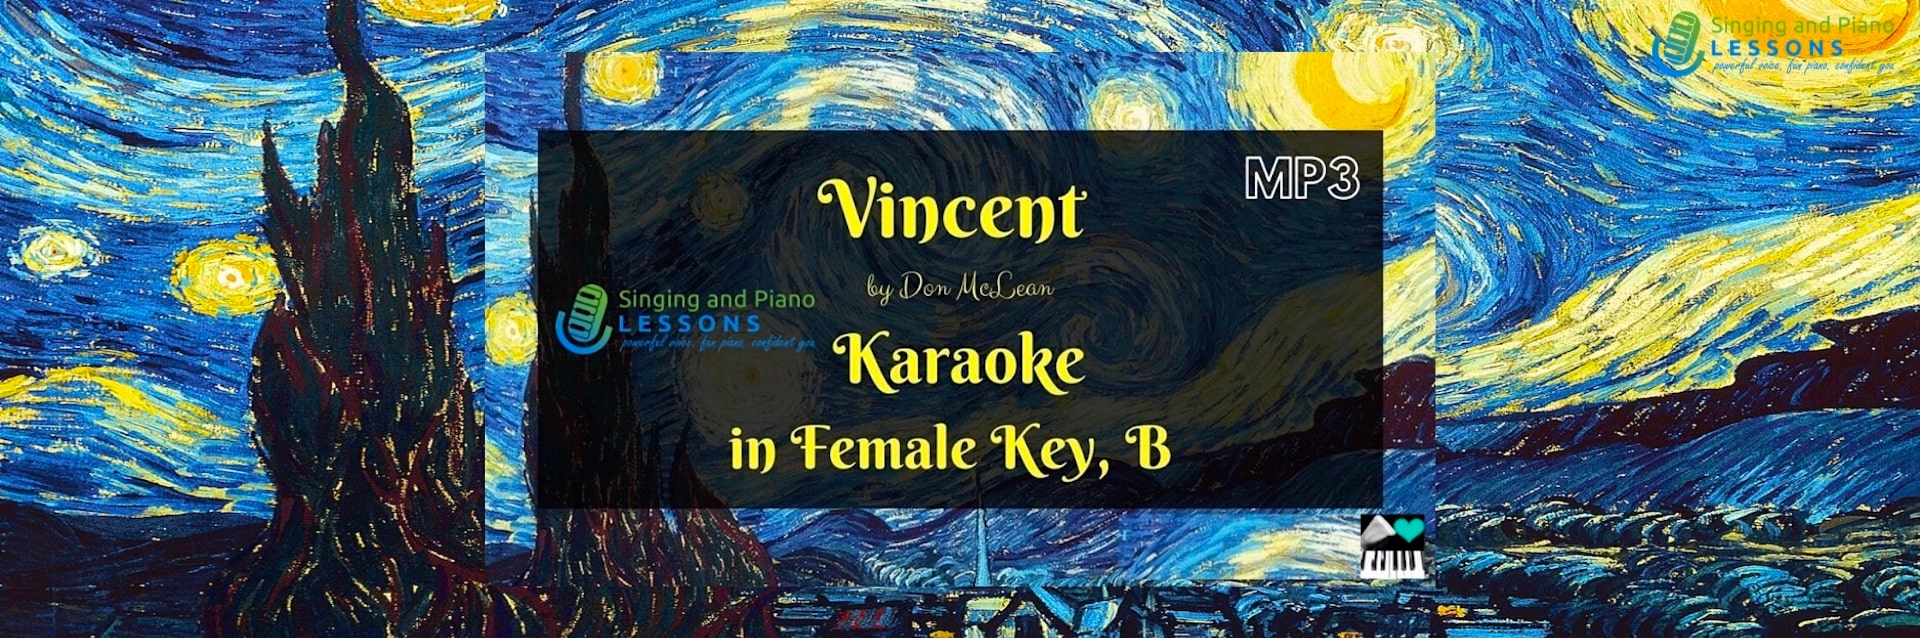 Vincent, Don McLean, Karaoke in Female Key B/ Baritones for Males